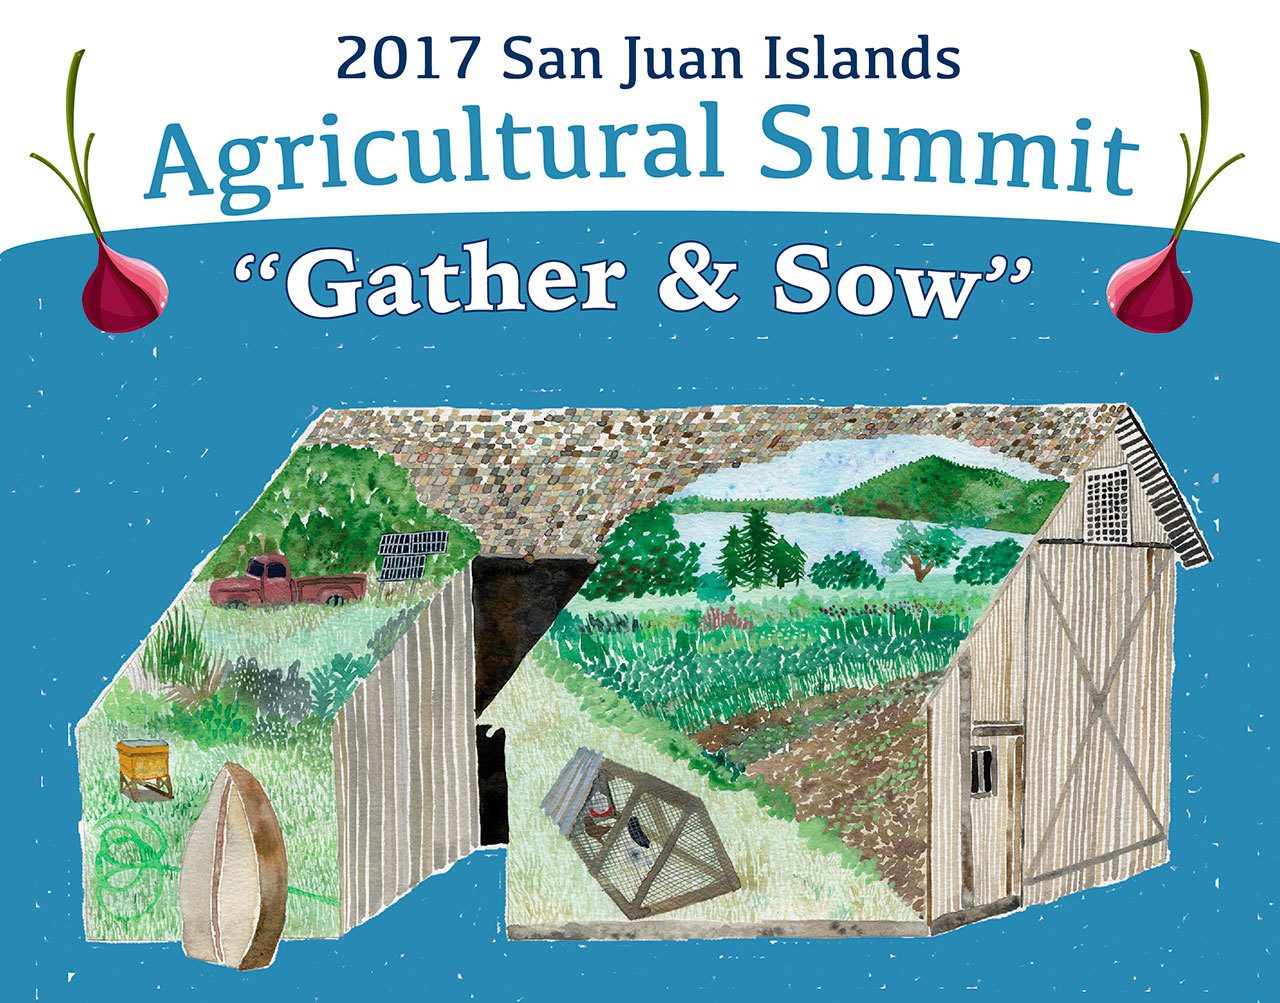 SJI Agricultural Summit set for Feb. 10-12